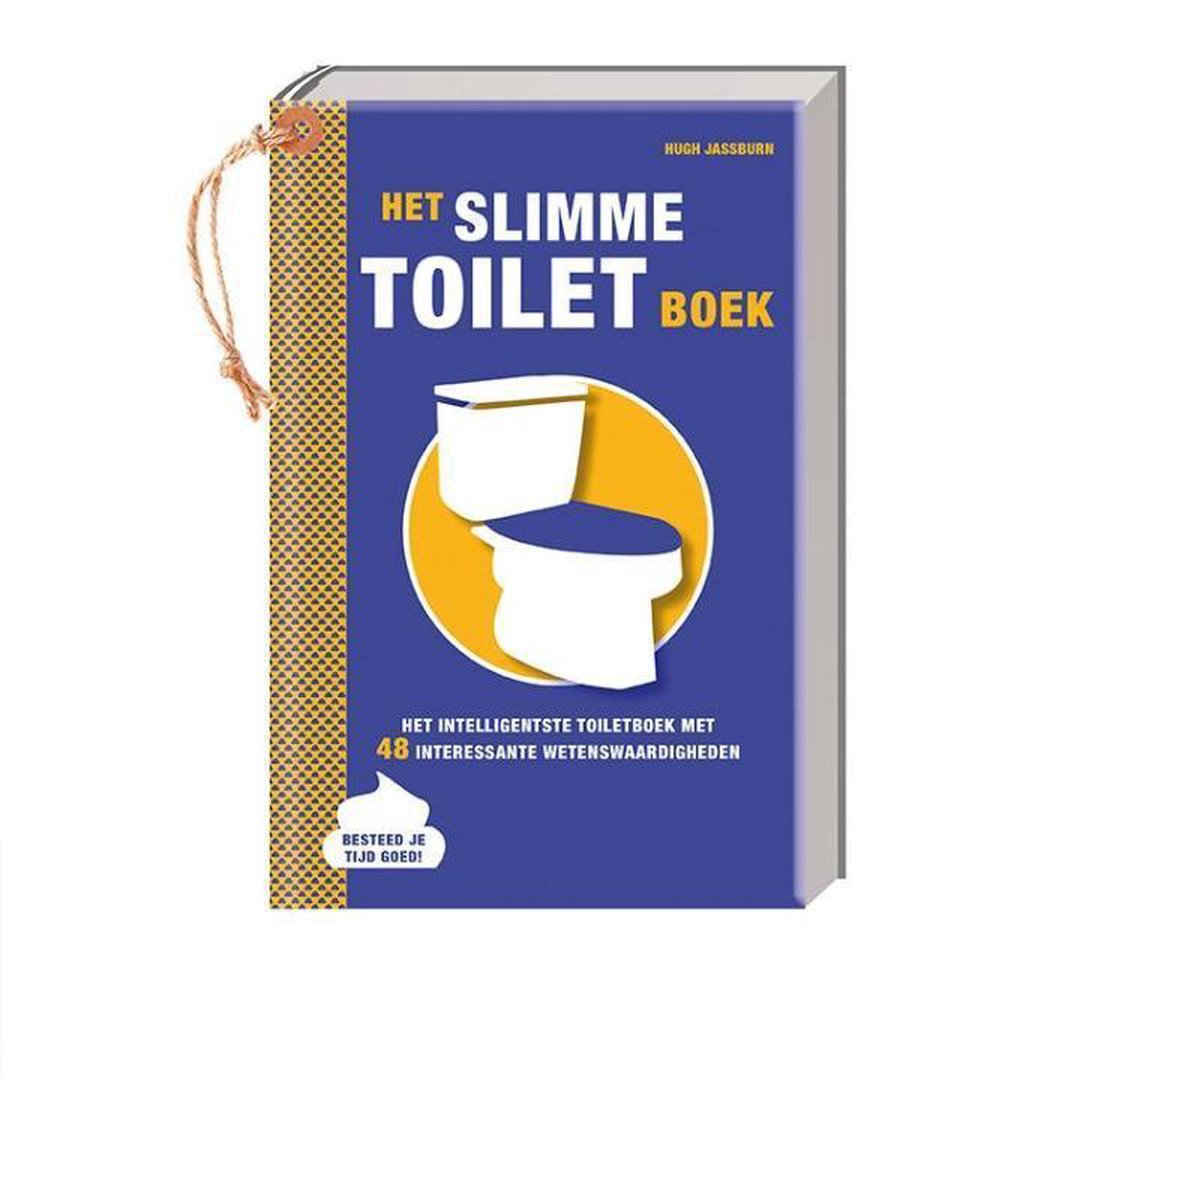 Het slimme toiletboek